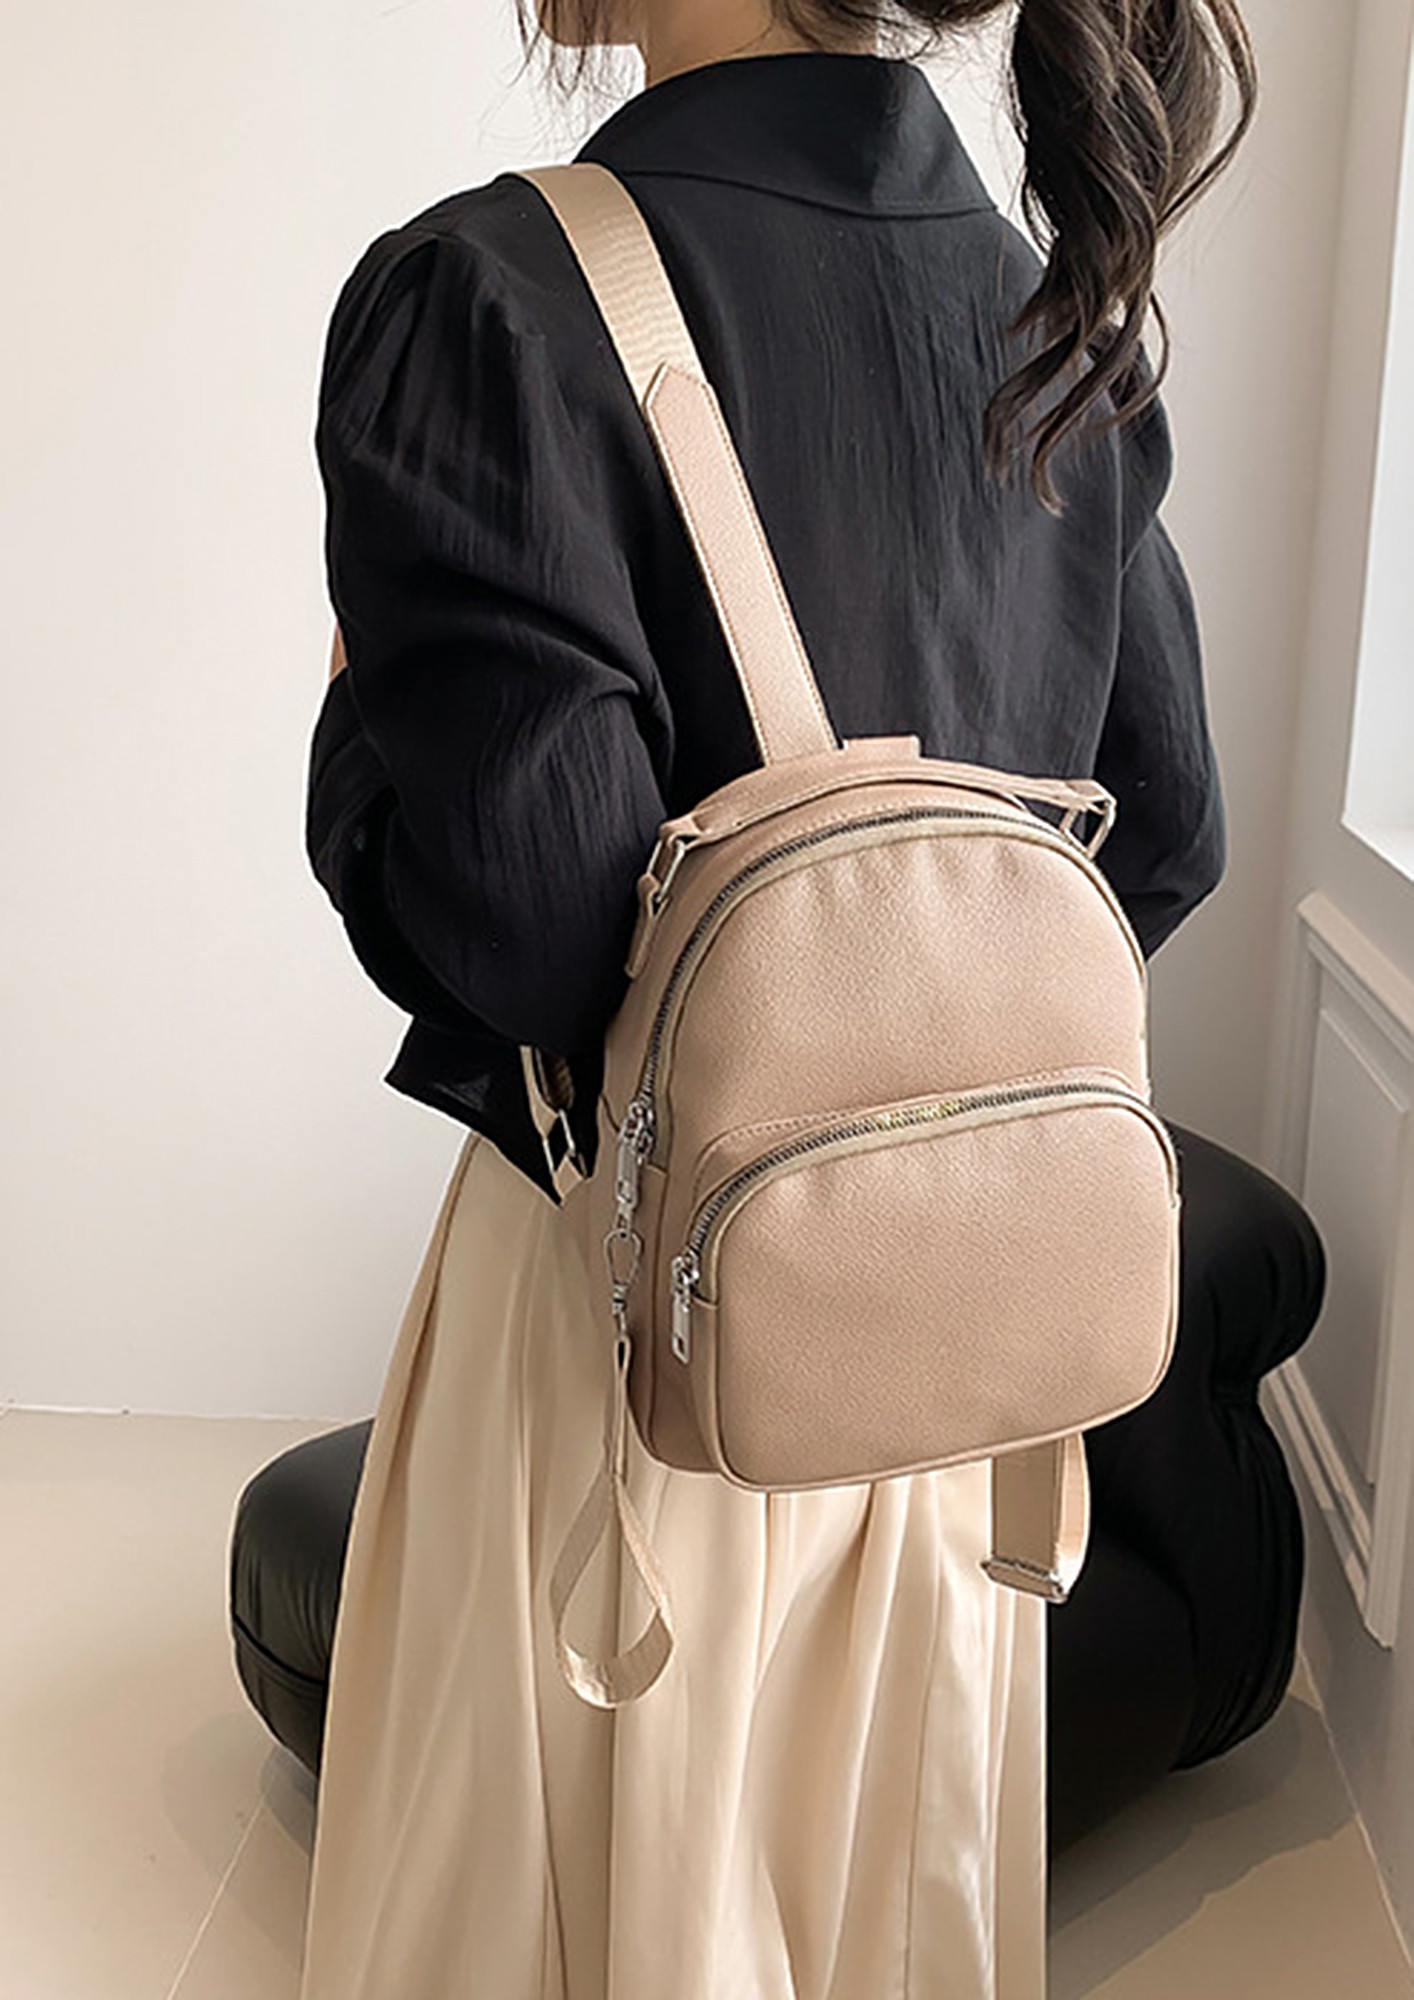 Amazon.com | Michael Kors Elliot Extra Small Convertible Messenger Backpack  Brown/Acorn One Size | Messenger Bags